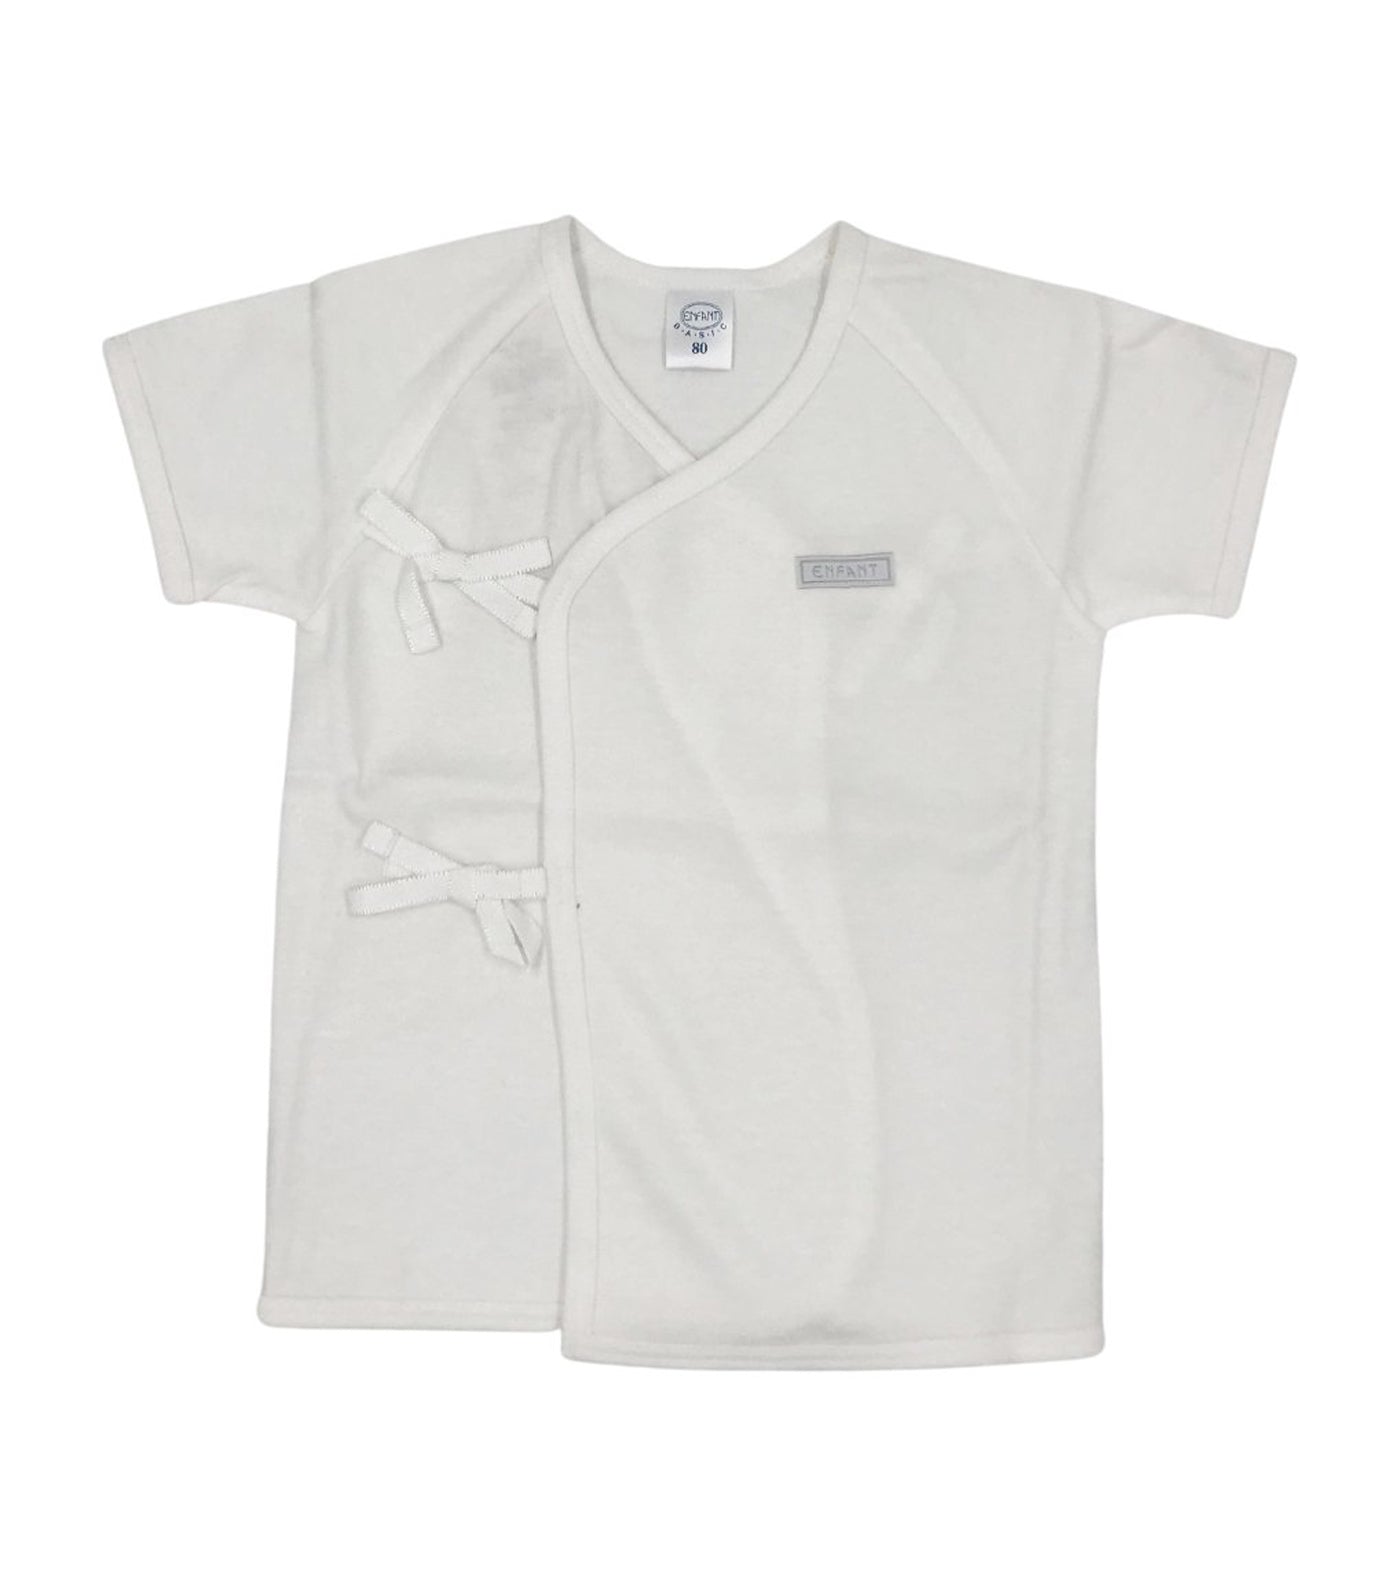 enfant white newborn nisex tieside short sleeve shirt